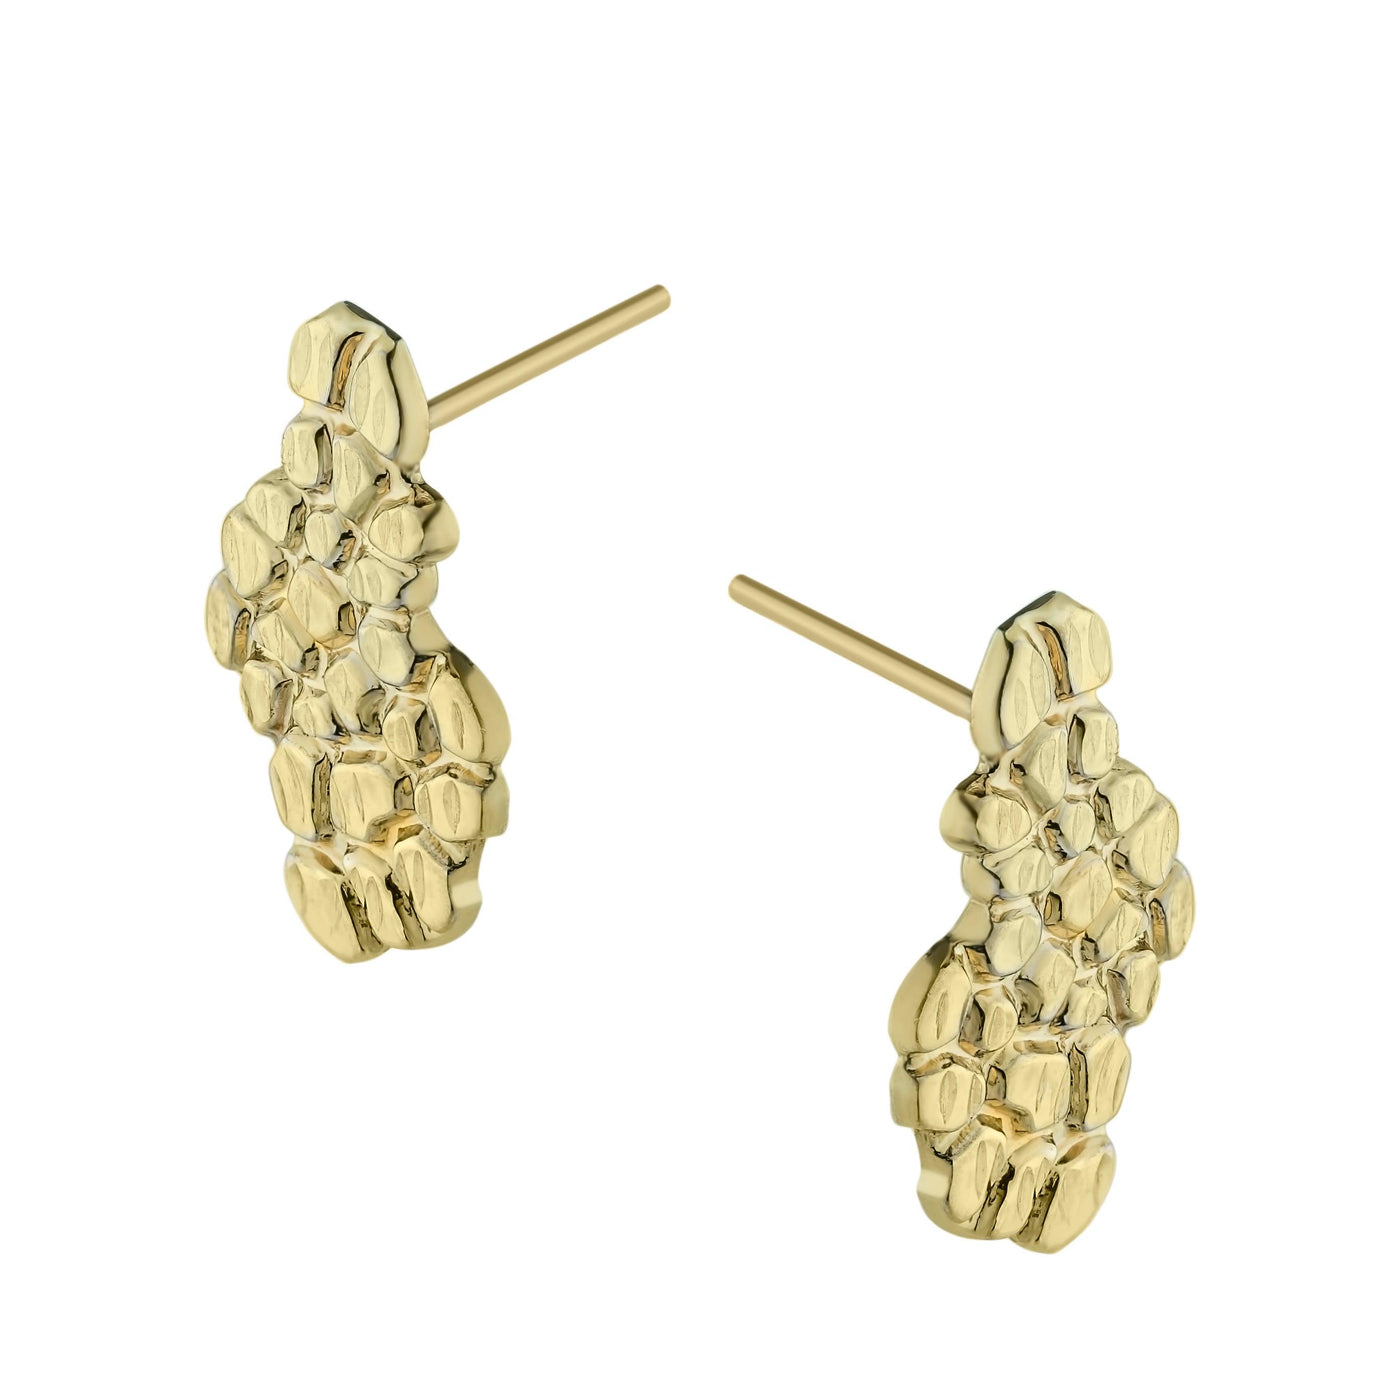 1" Women's Nugget Stud Earrings 10K Yellow Gold - bayamjewelry